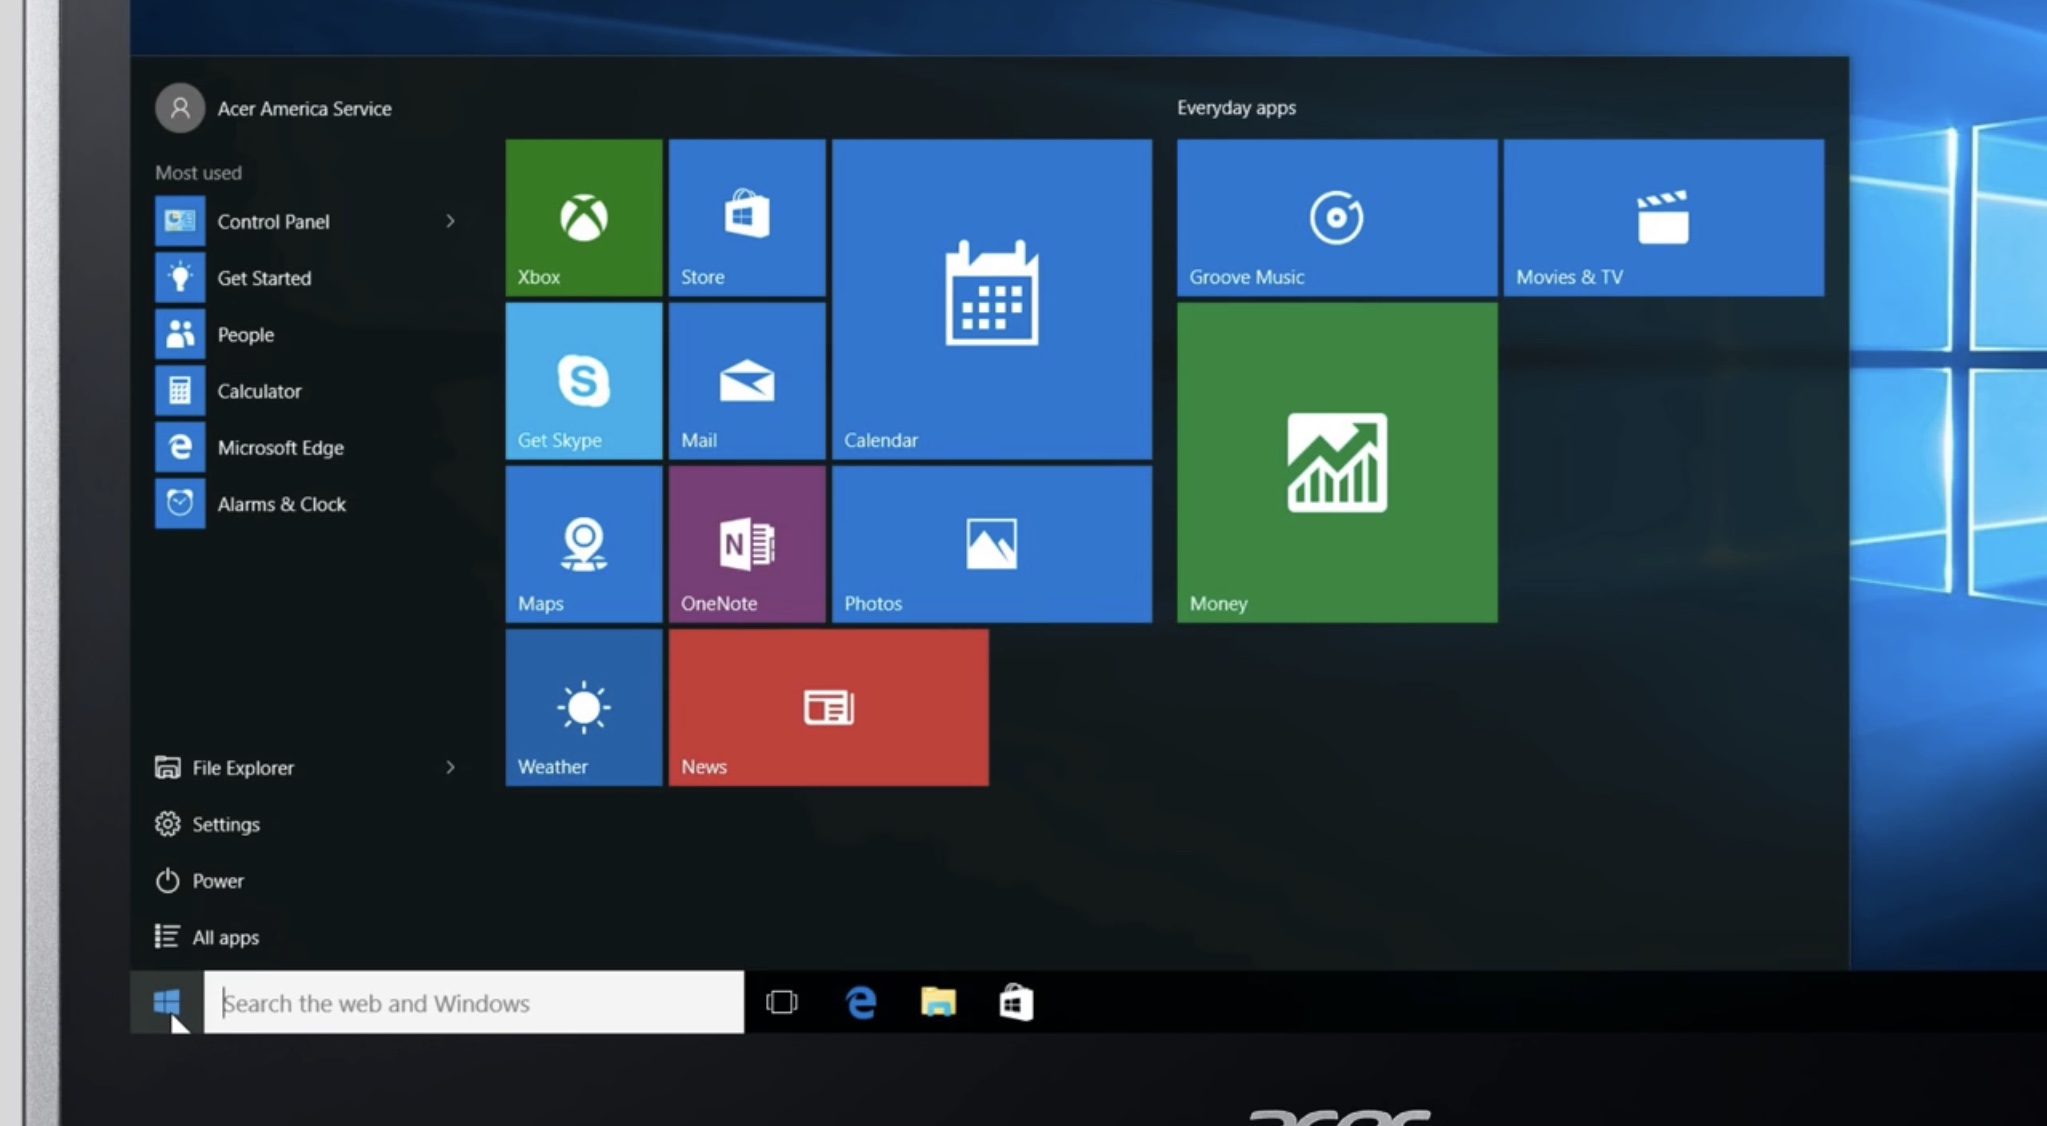 Windows 10 Live Tiles